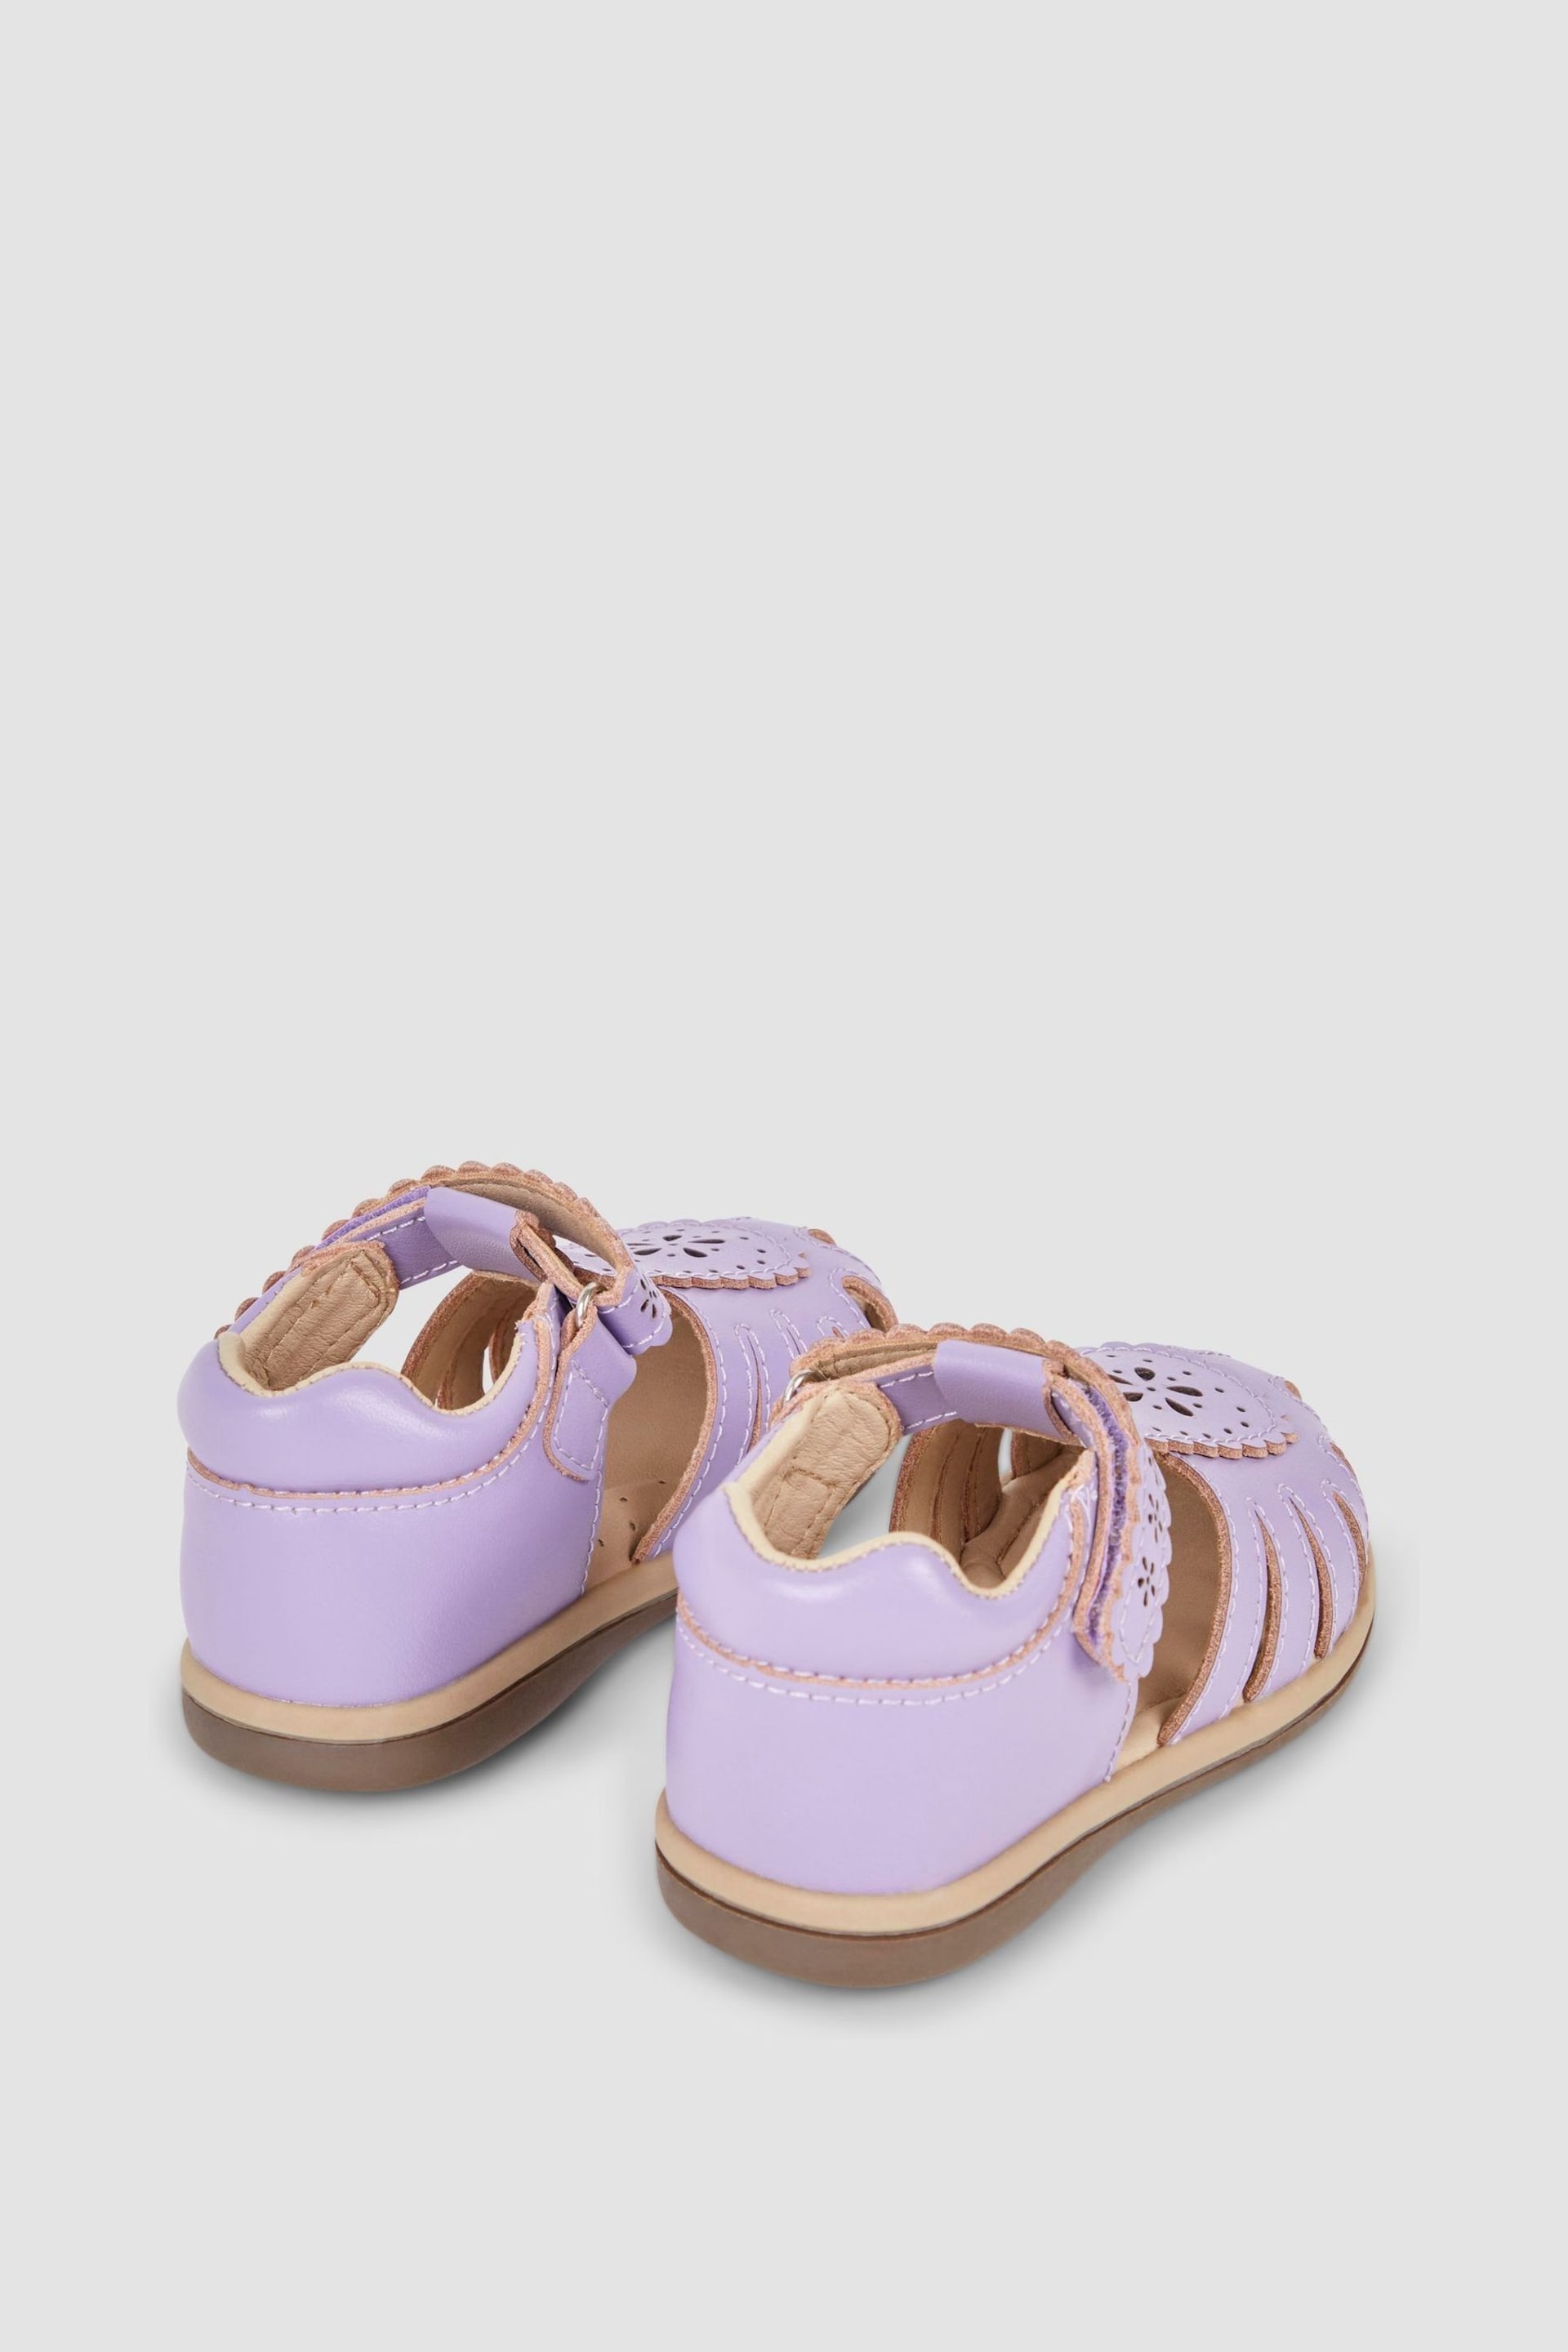 JoJo Maman Bébé Lilac Pretty Leather Closed Toe Sandals - Image 4 of 4